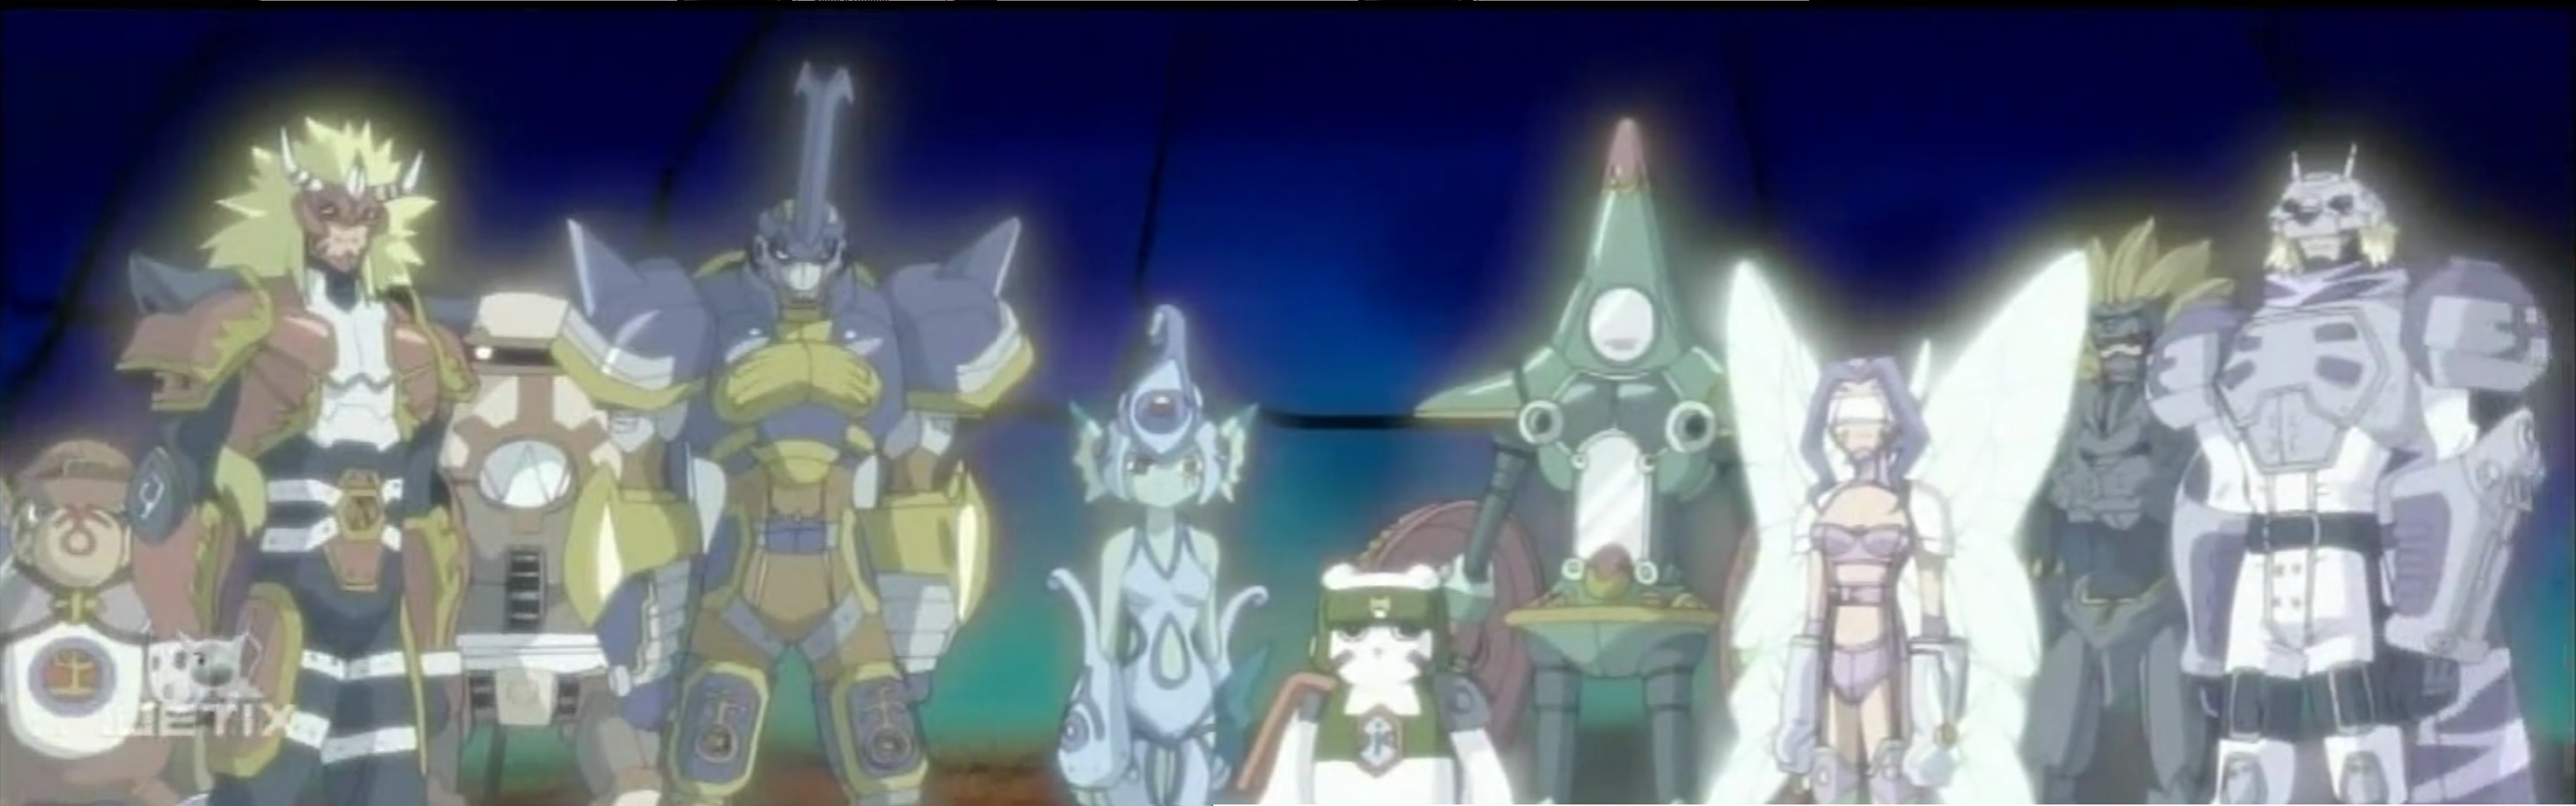 Ten Legendary Warriors, DigimonWiki